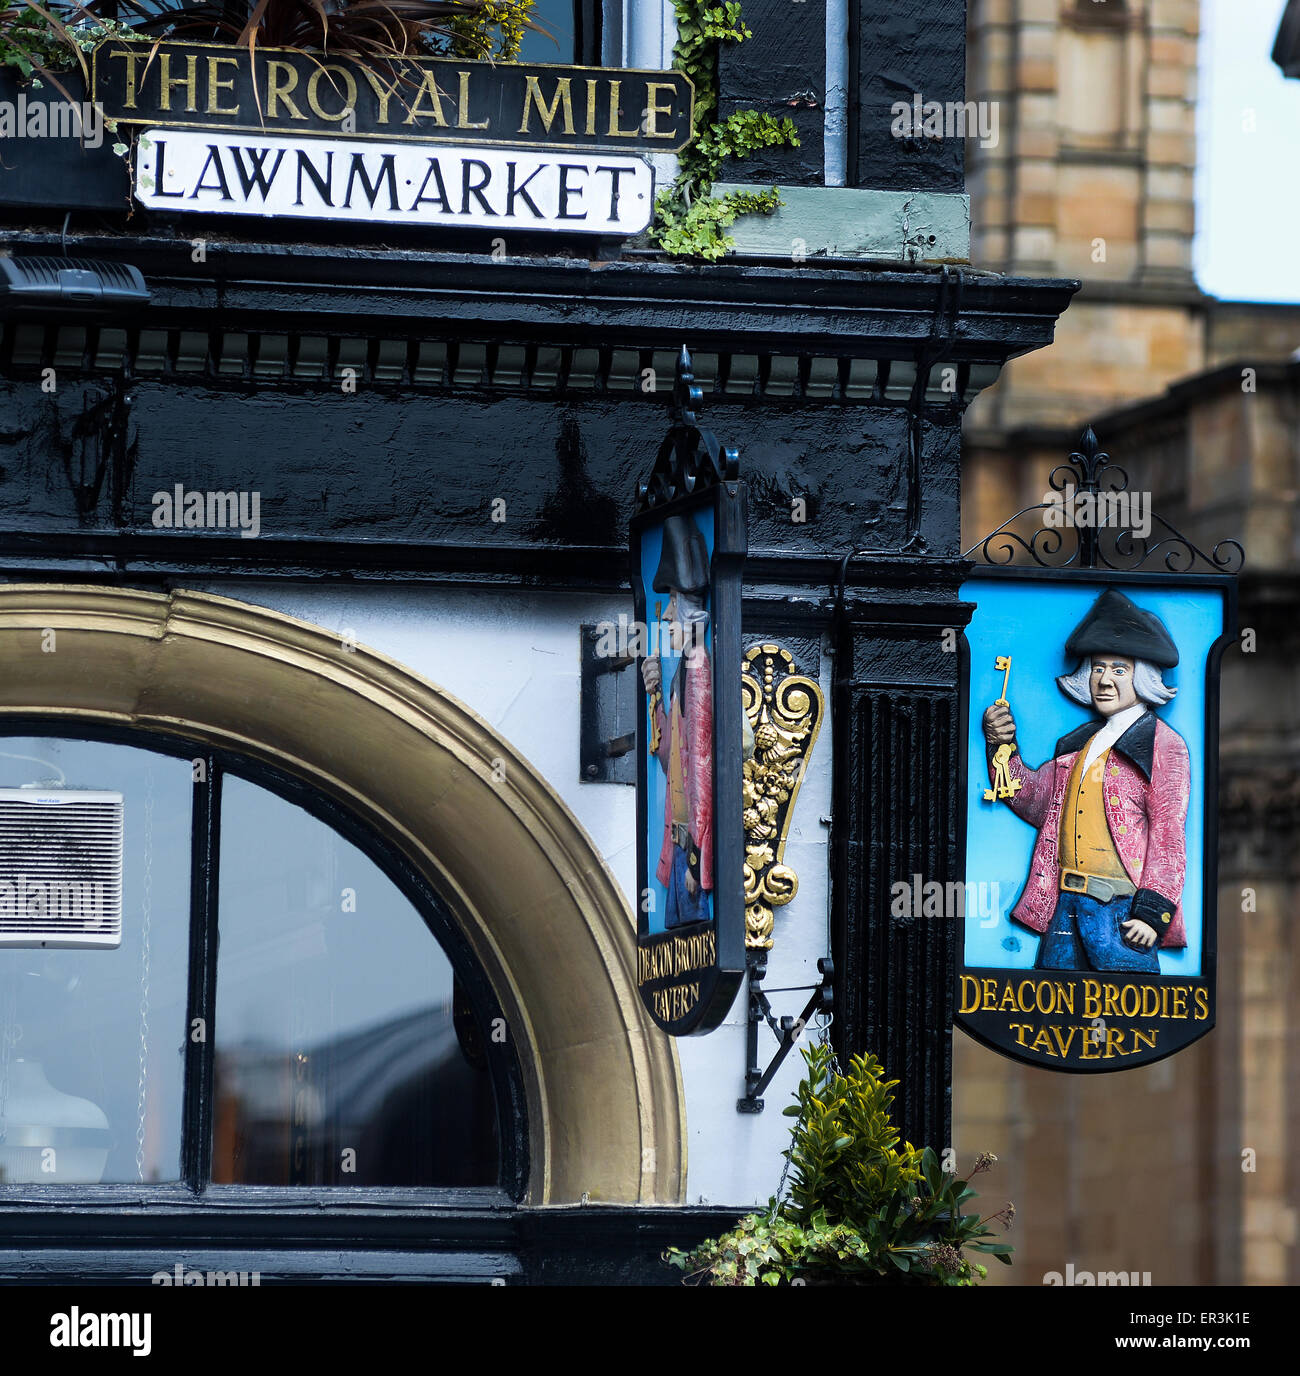 Deacon Brodies Tavern on the Royal Mile in Scotlands capital ciy, Edinburgh Stock Photo